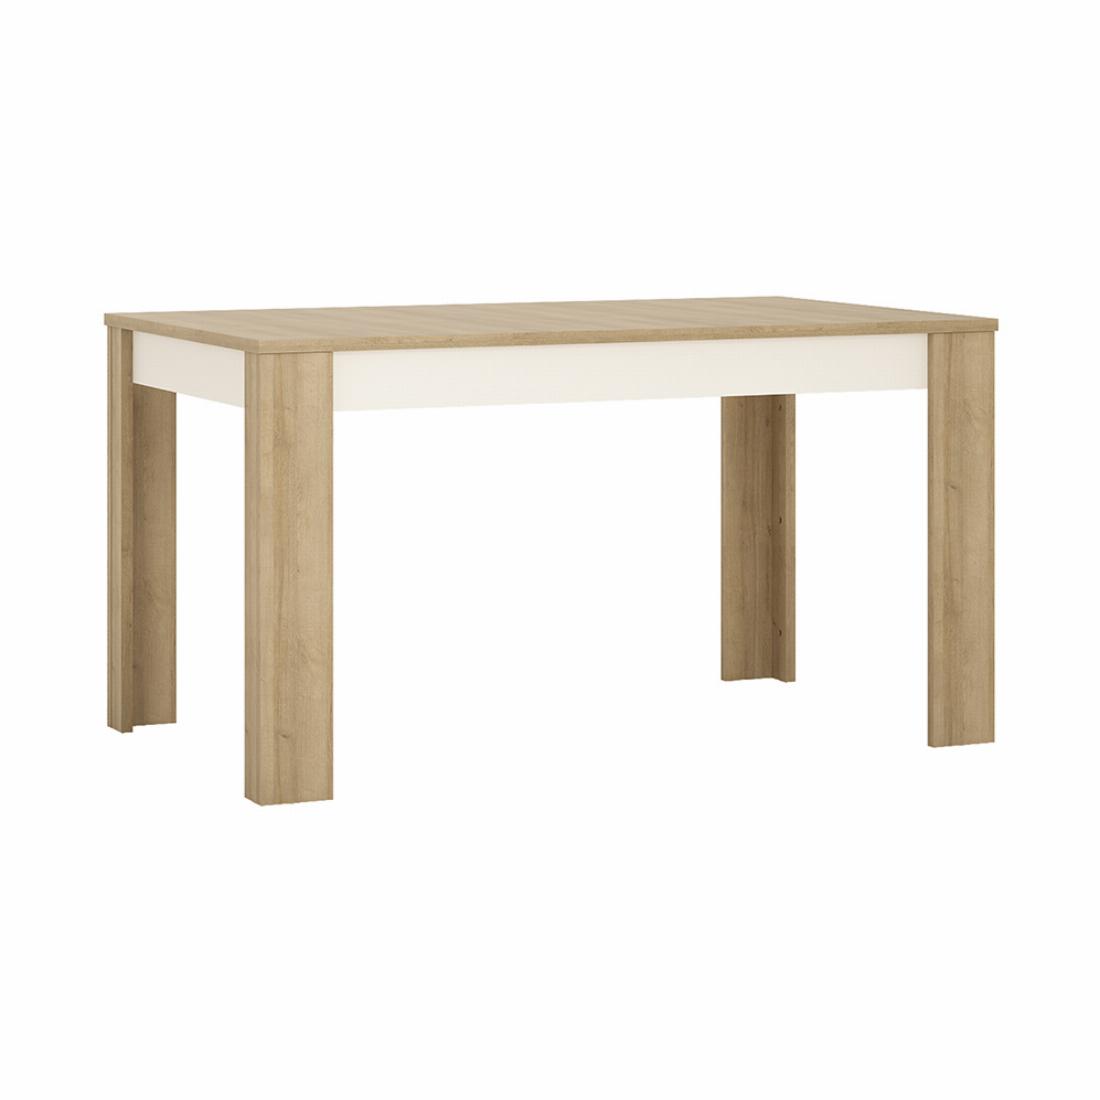 Lyon Medium extending dining table 140180cm